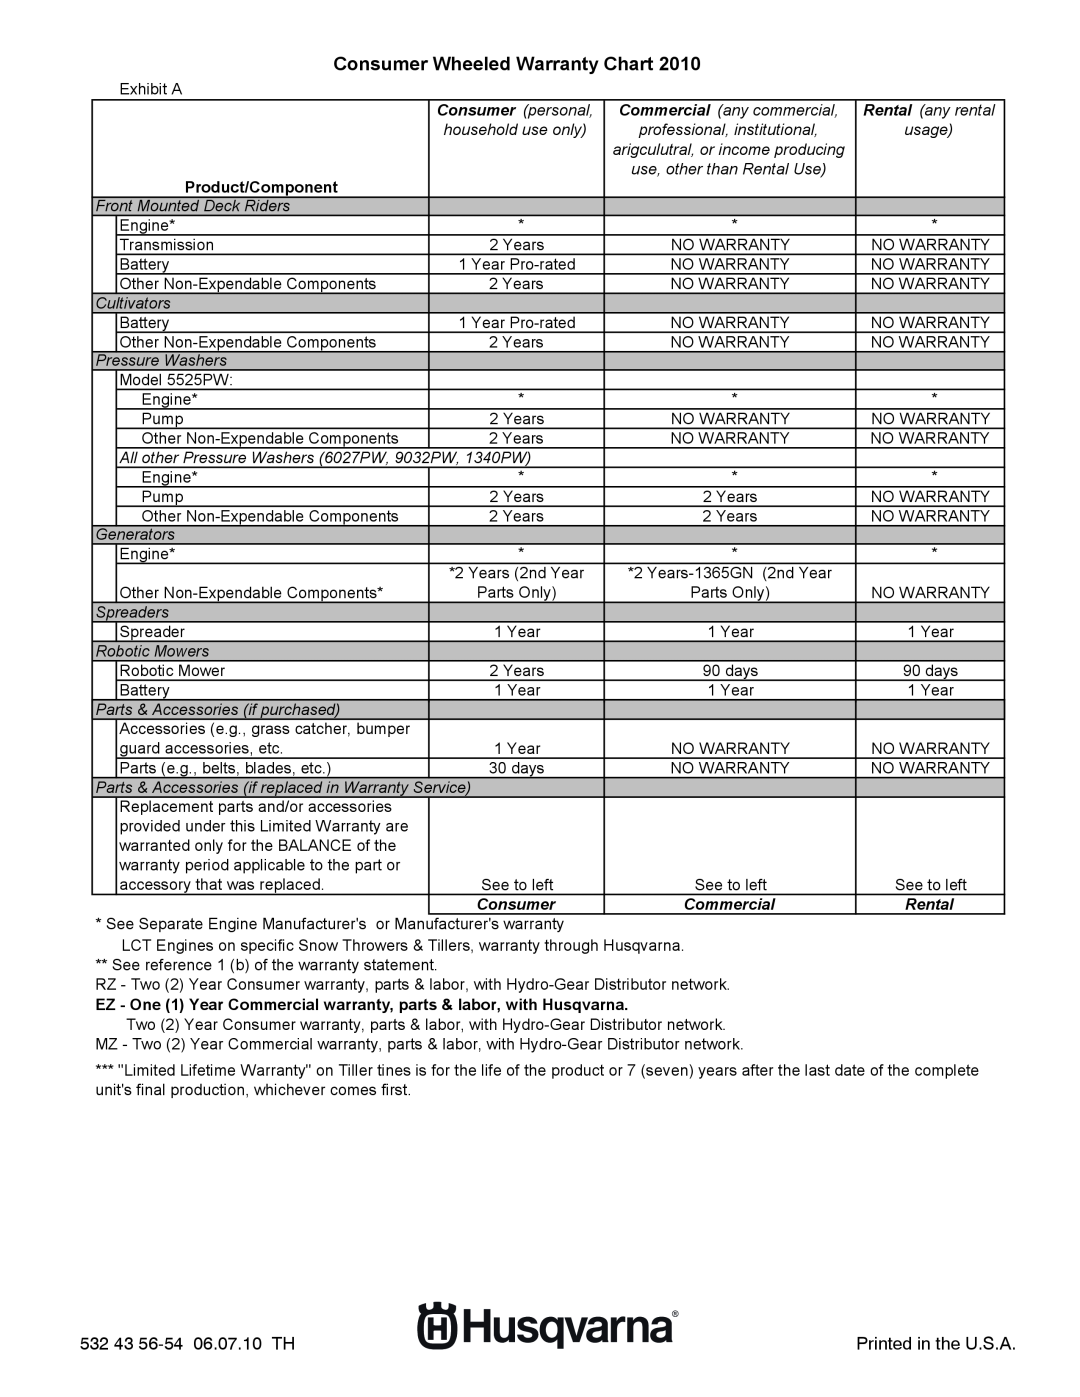 Husqvarna 16530-LS manual Consumer Wheeled Warranty Chart, 532 43 56-54 06.07.10 TH, Product/Component, Rental 